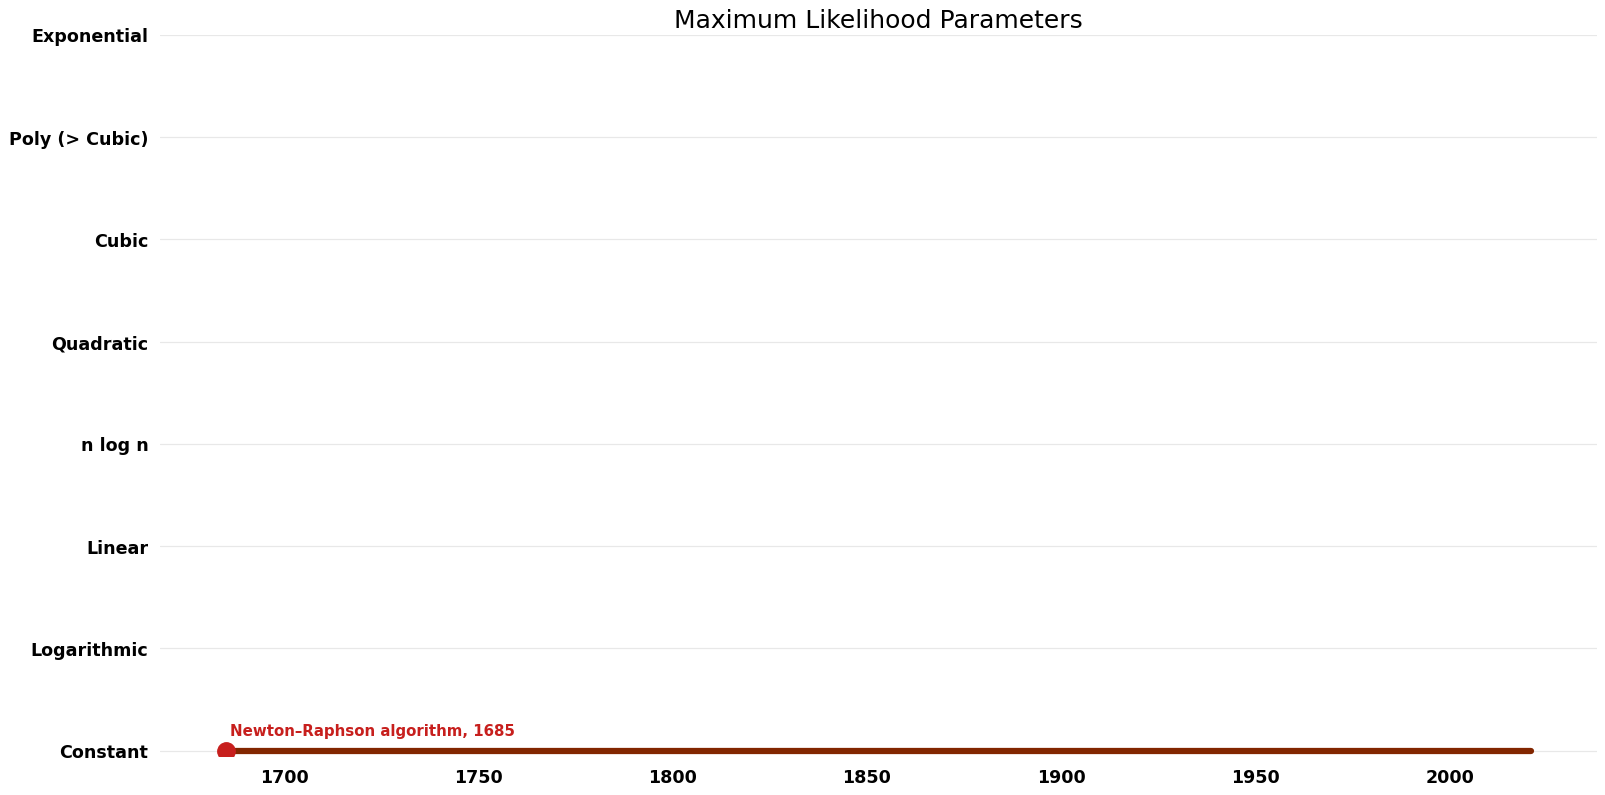 Maximum Likelihood Parameters - Space.png